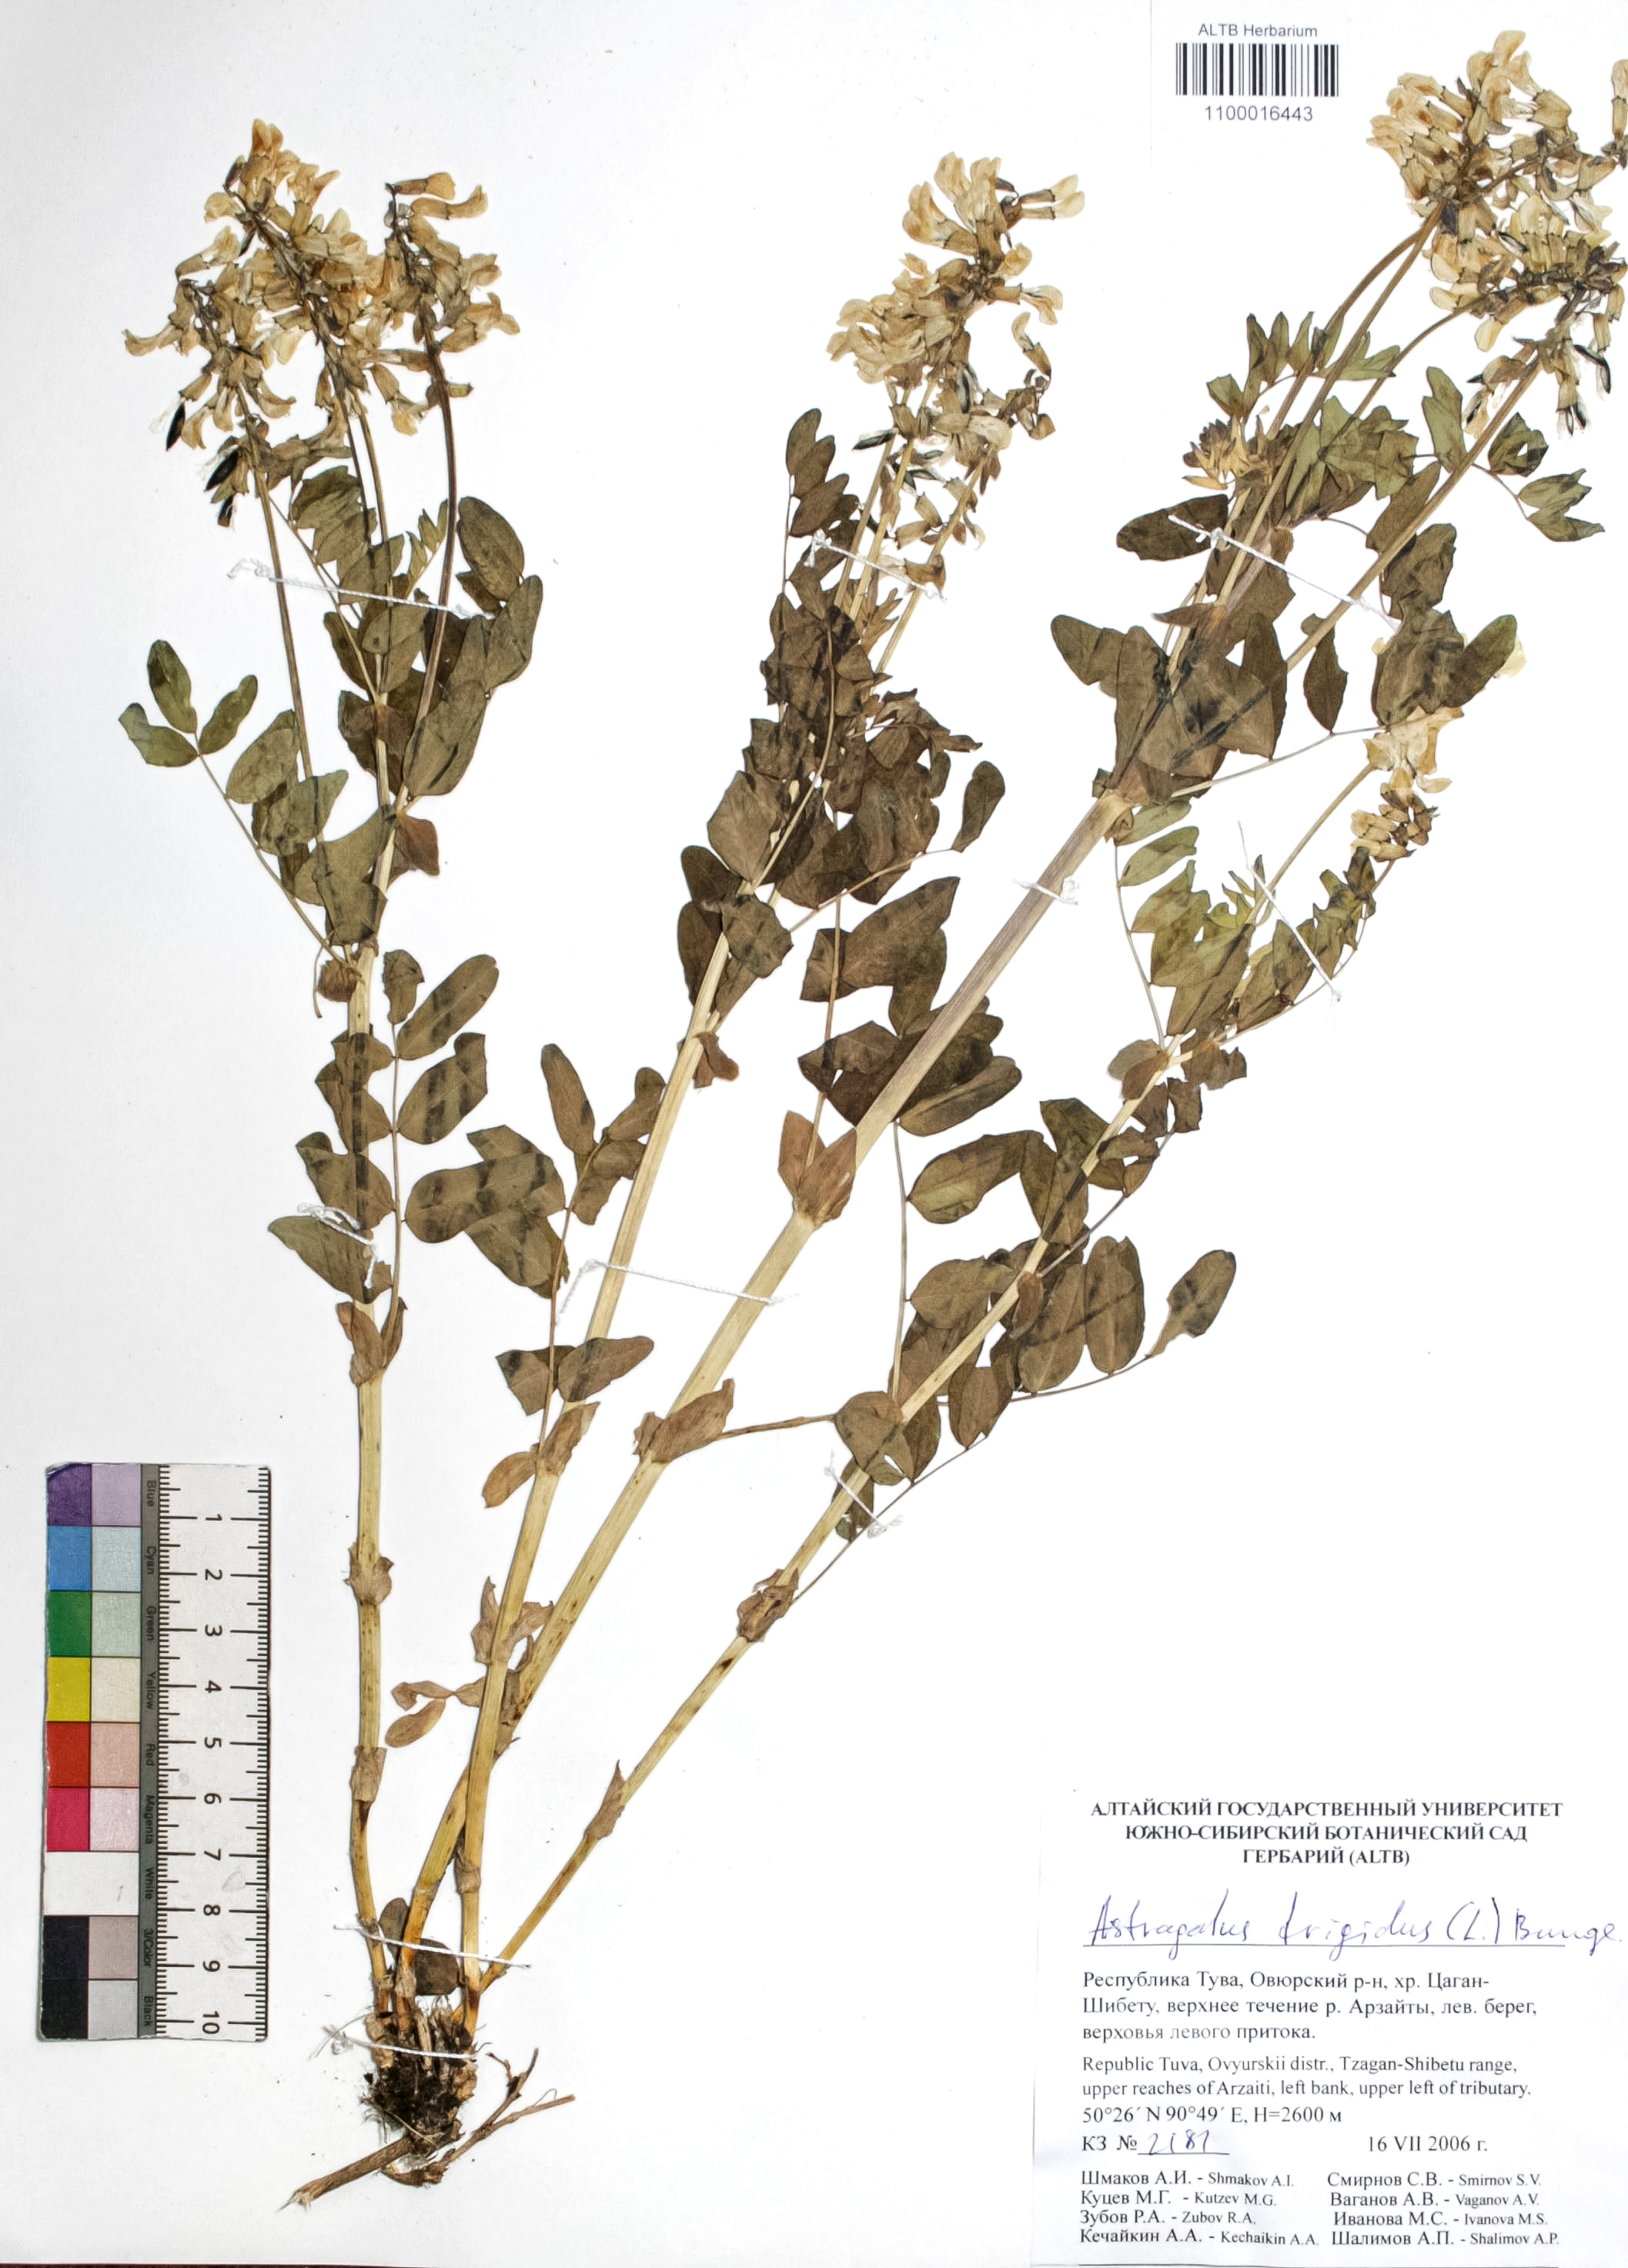 Astragalus frigidus (L.) A. Gray